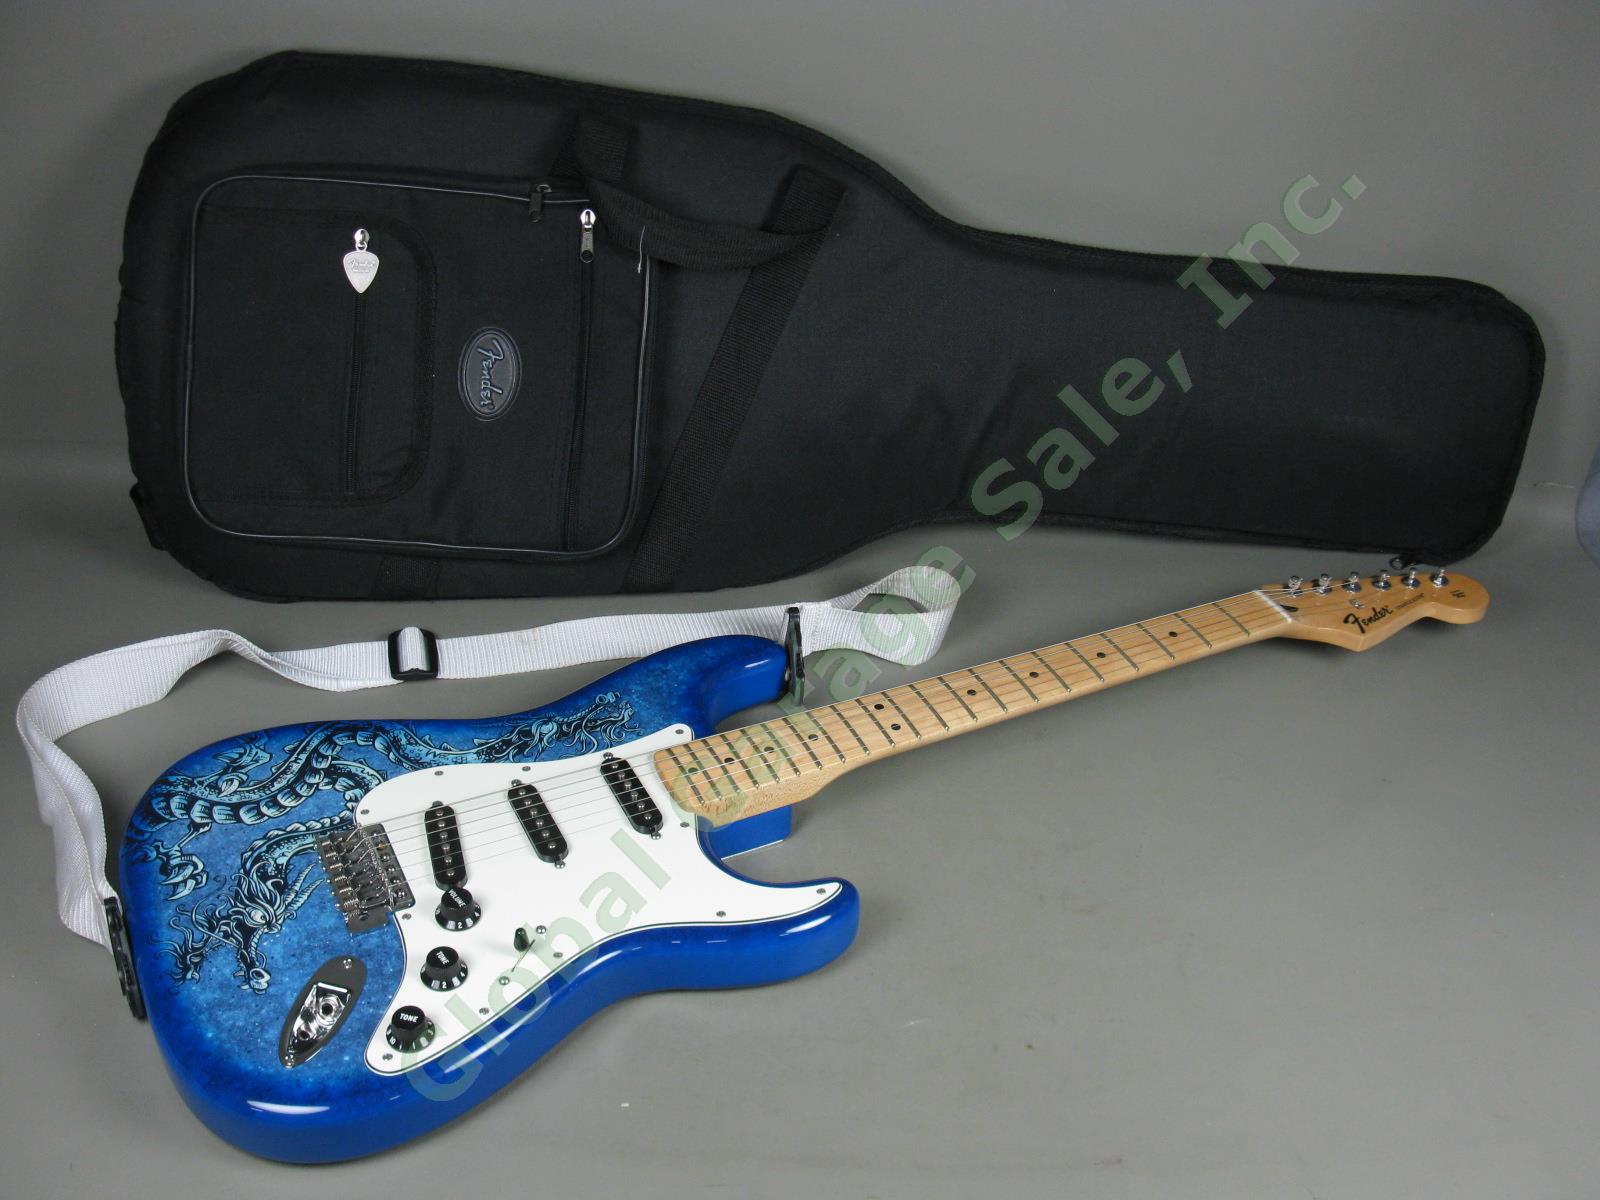 MINT! 2015 Fender David Lozeau Blue Dragon Stratocaster Electric Guitar w/Case